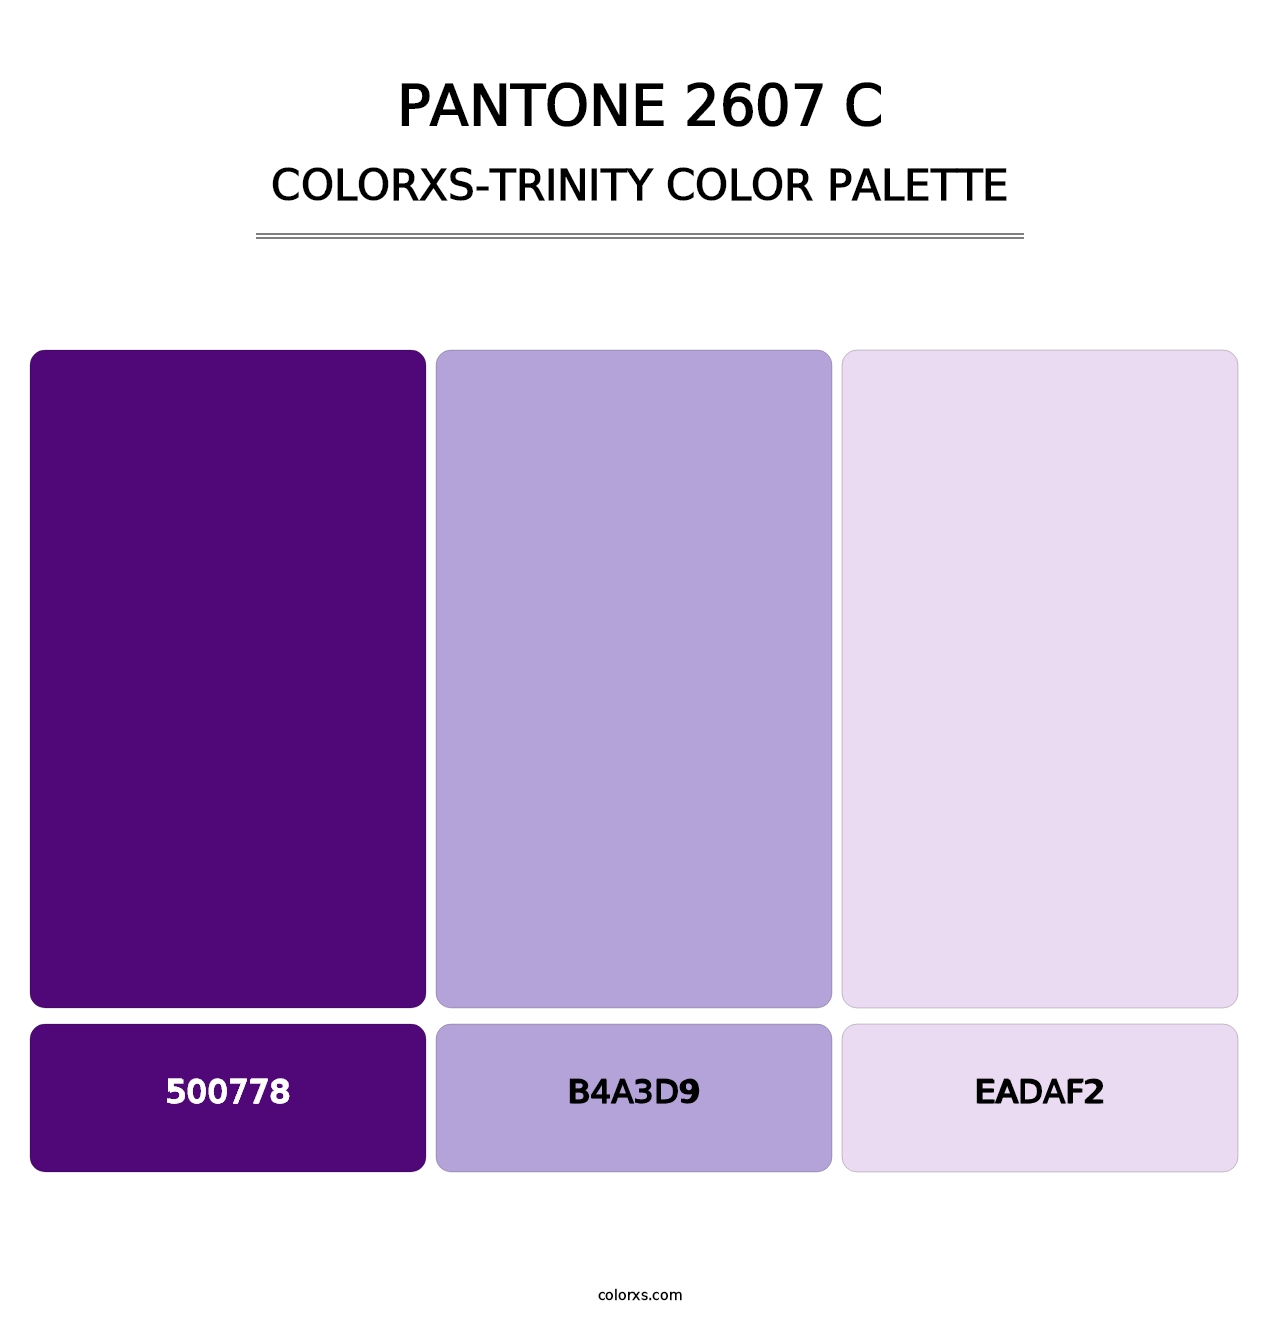 PANTONE 2607 C - Colorxs Trinity Palette